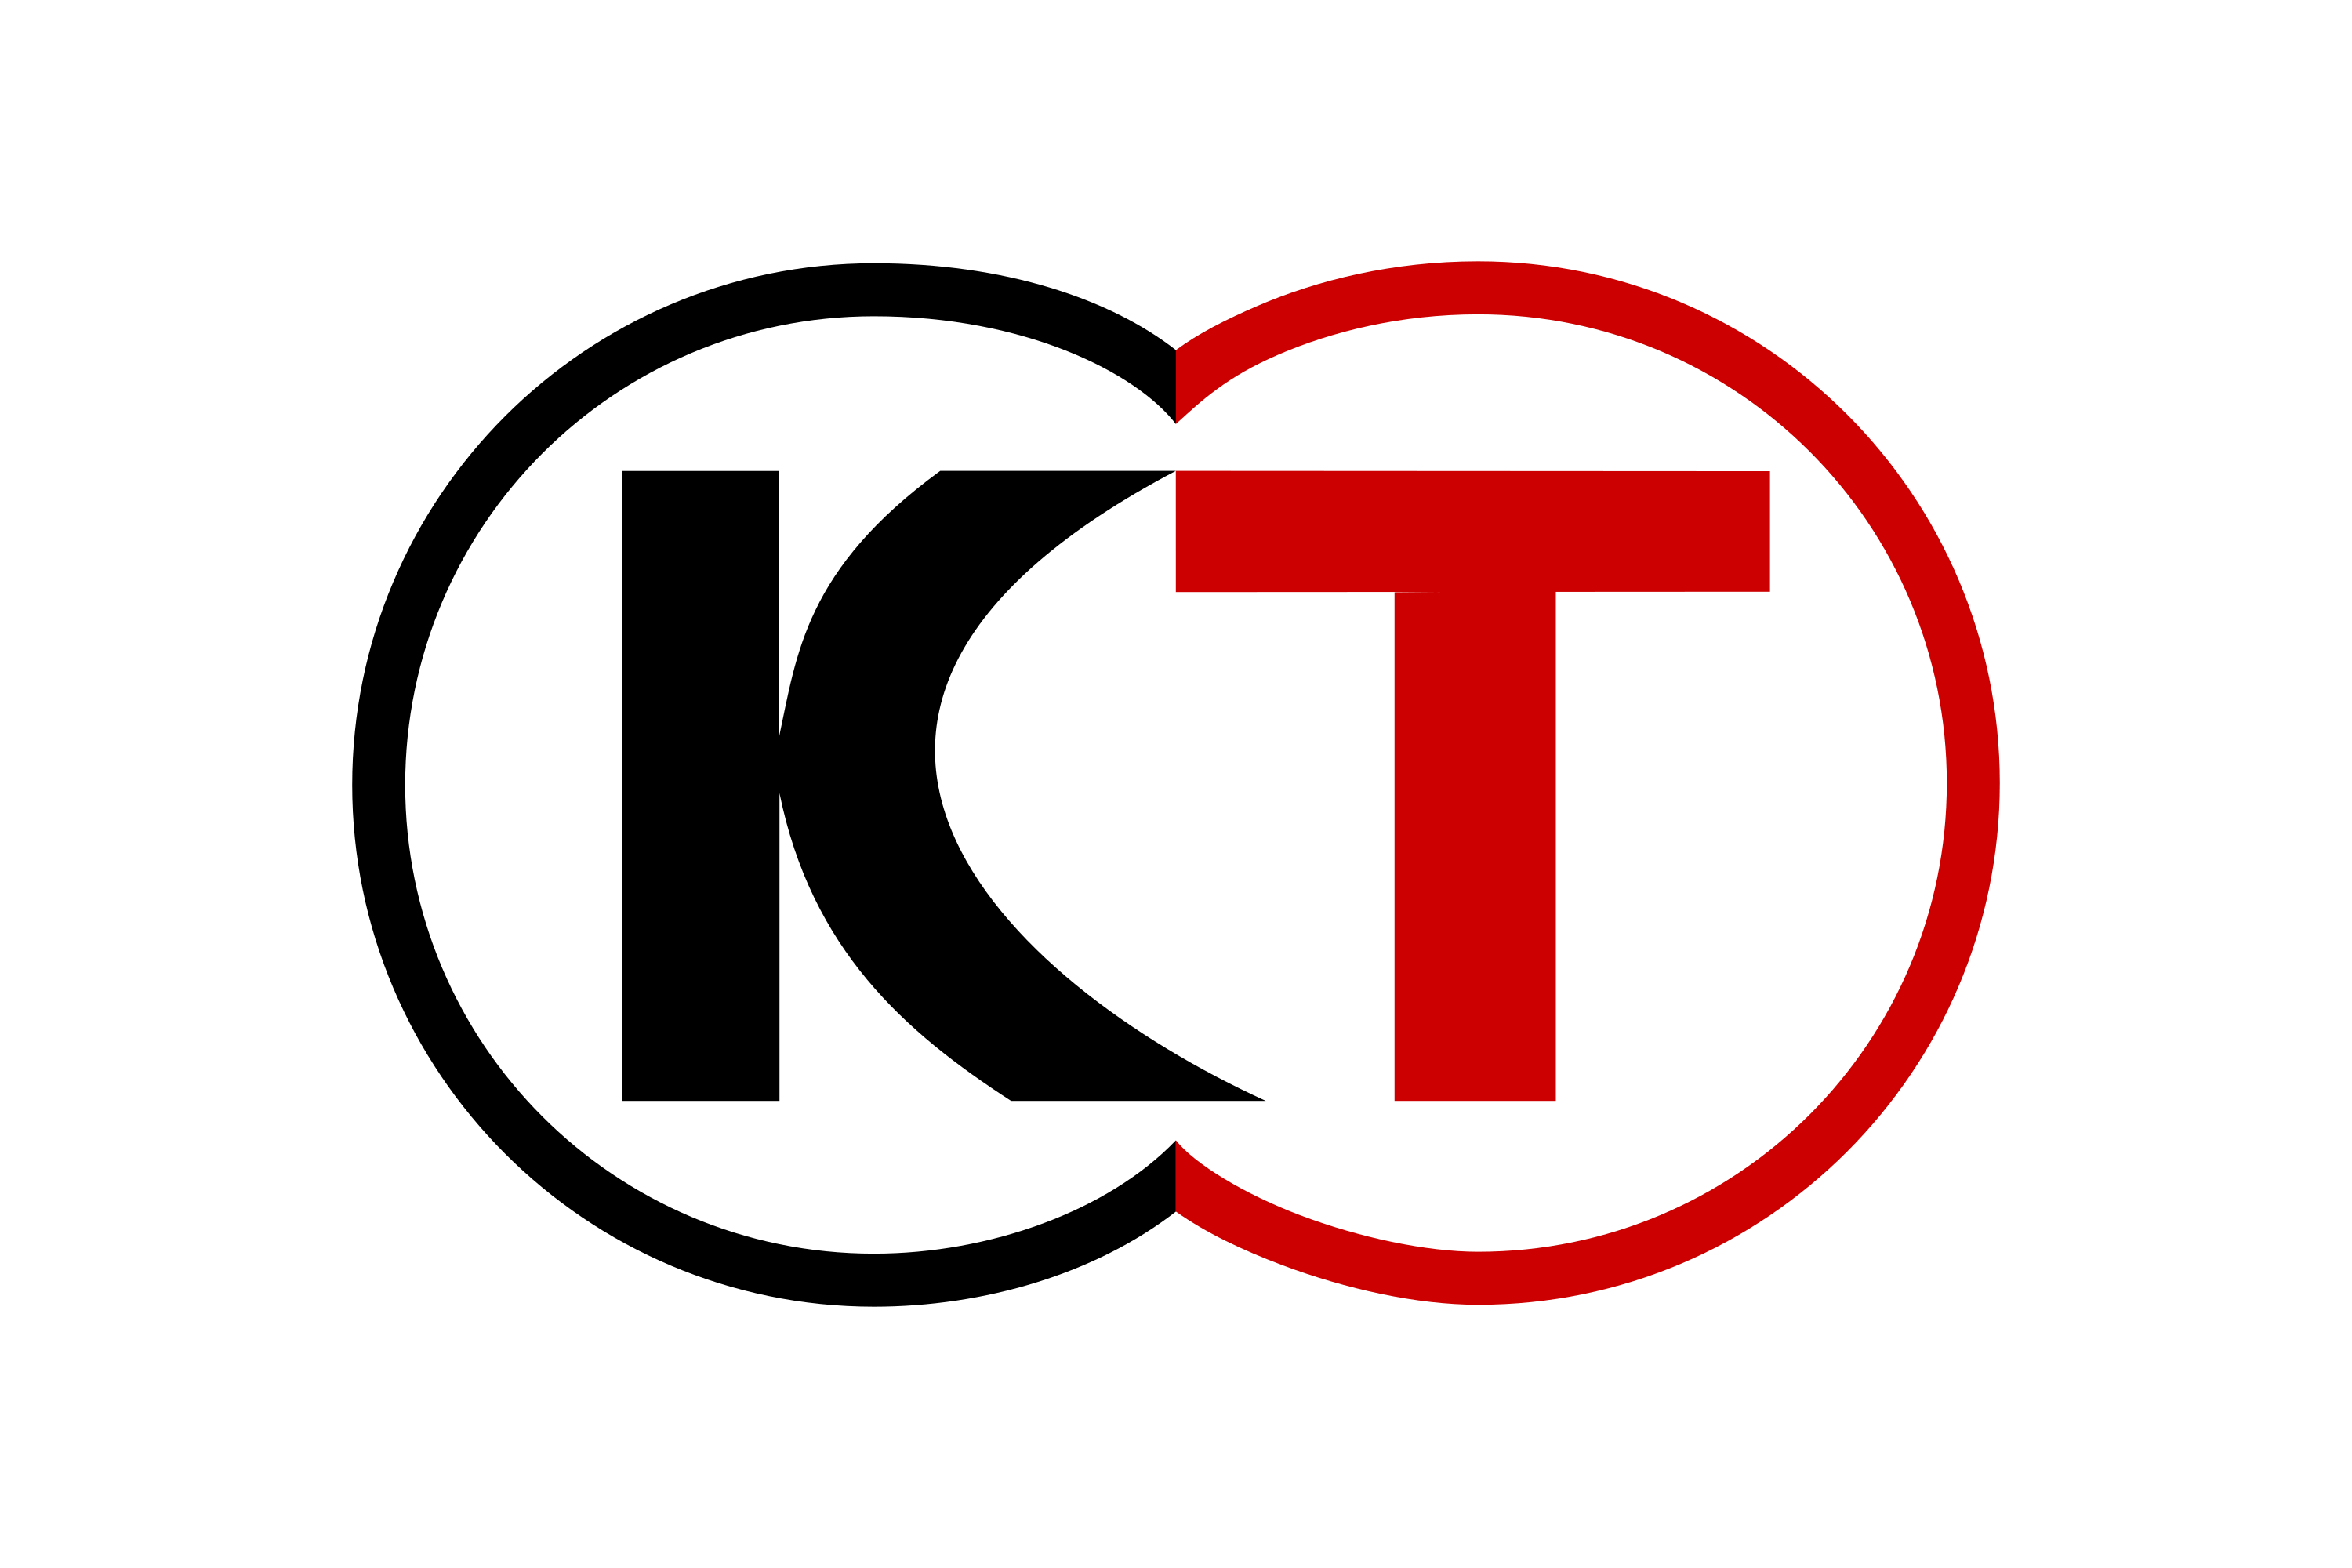 Tecmo Koei Logo